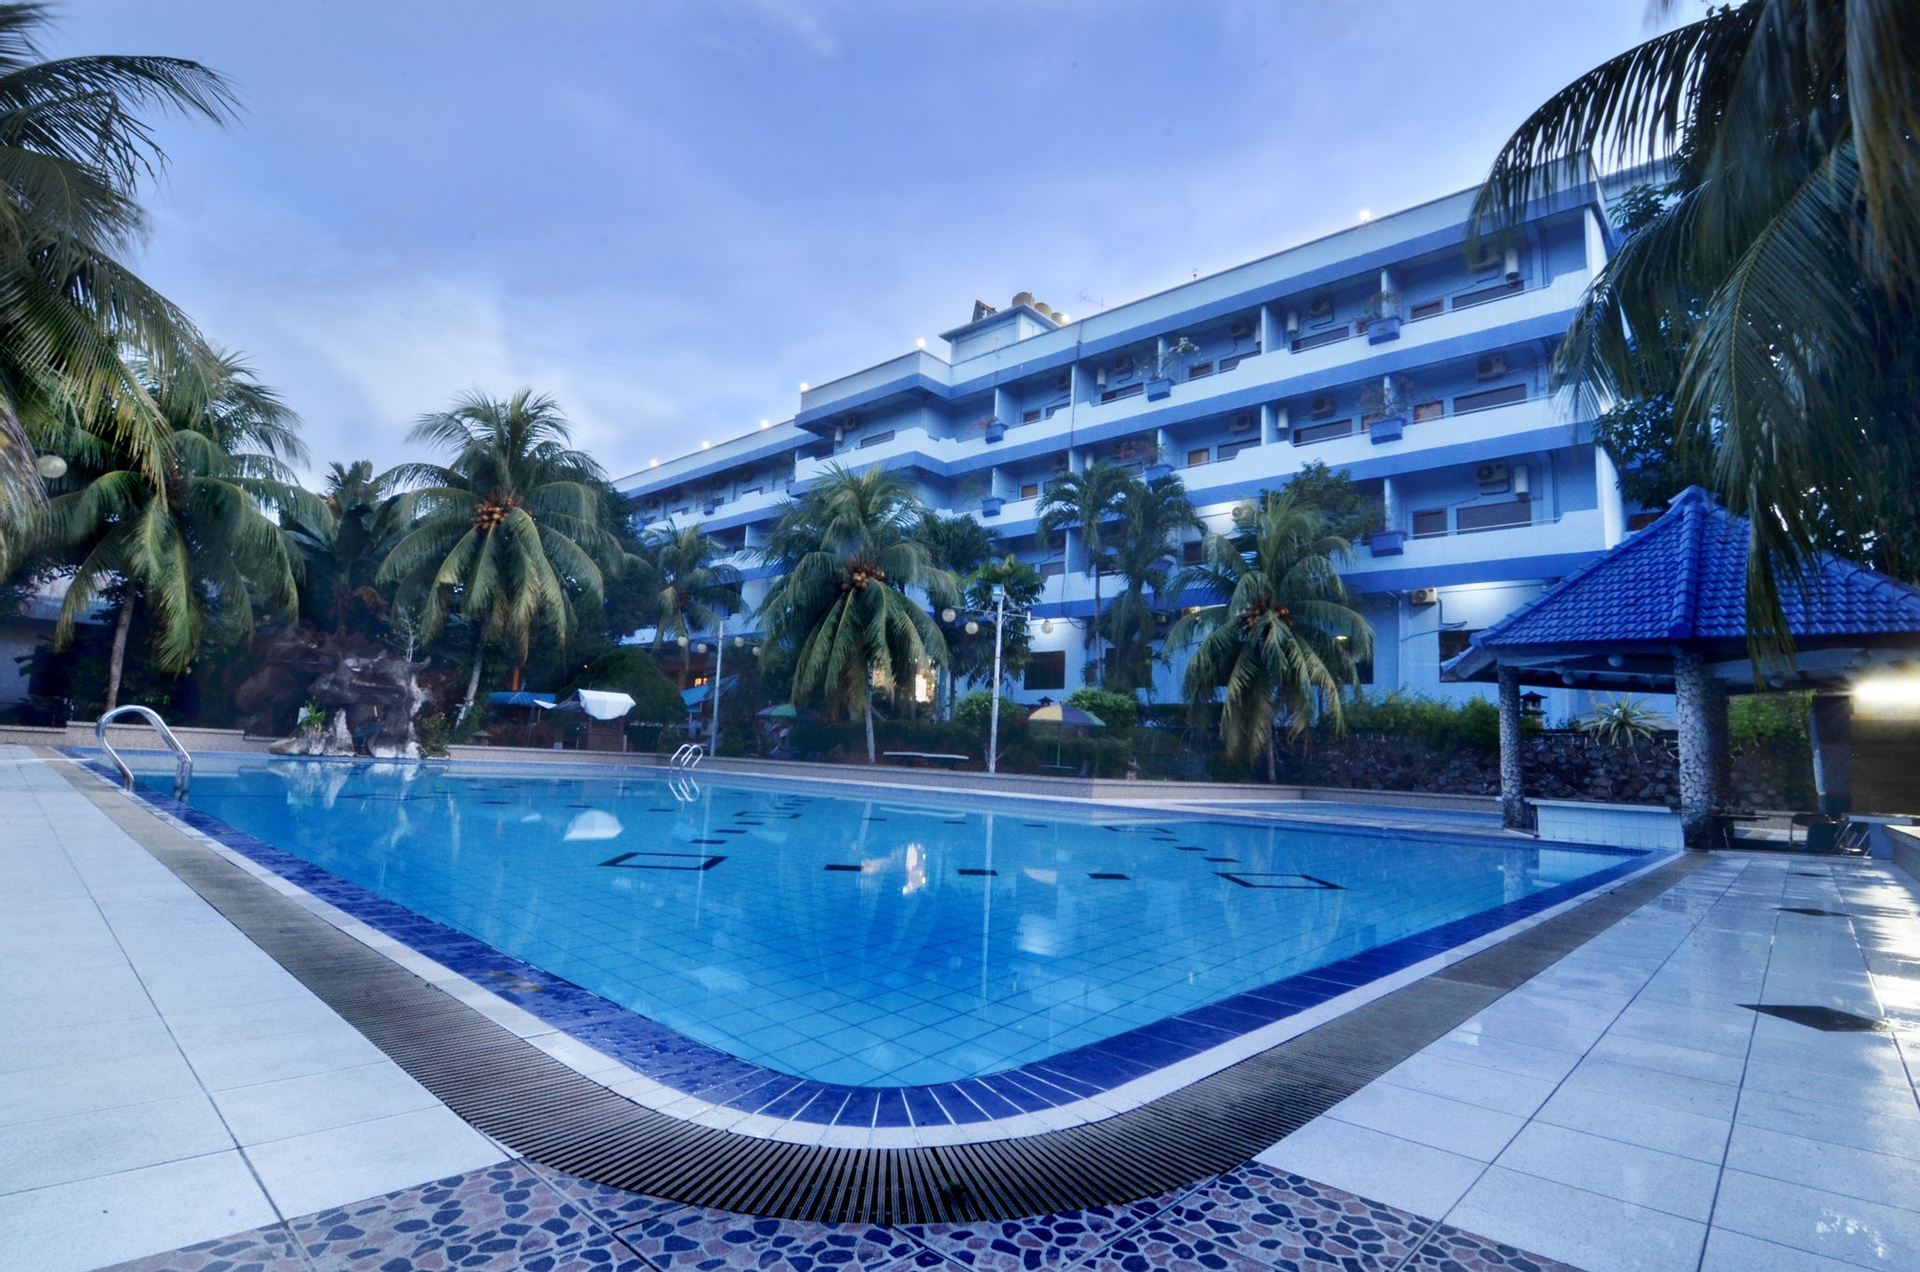 Pelangi Hotel & Resort, Tanjung Pinang